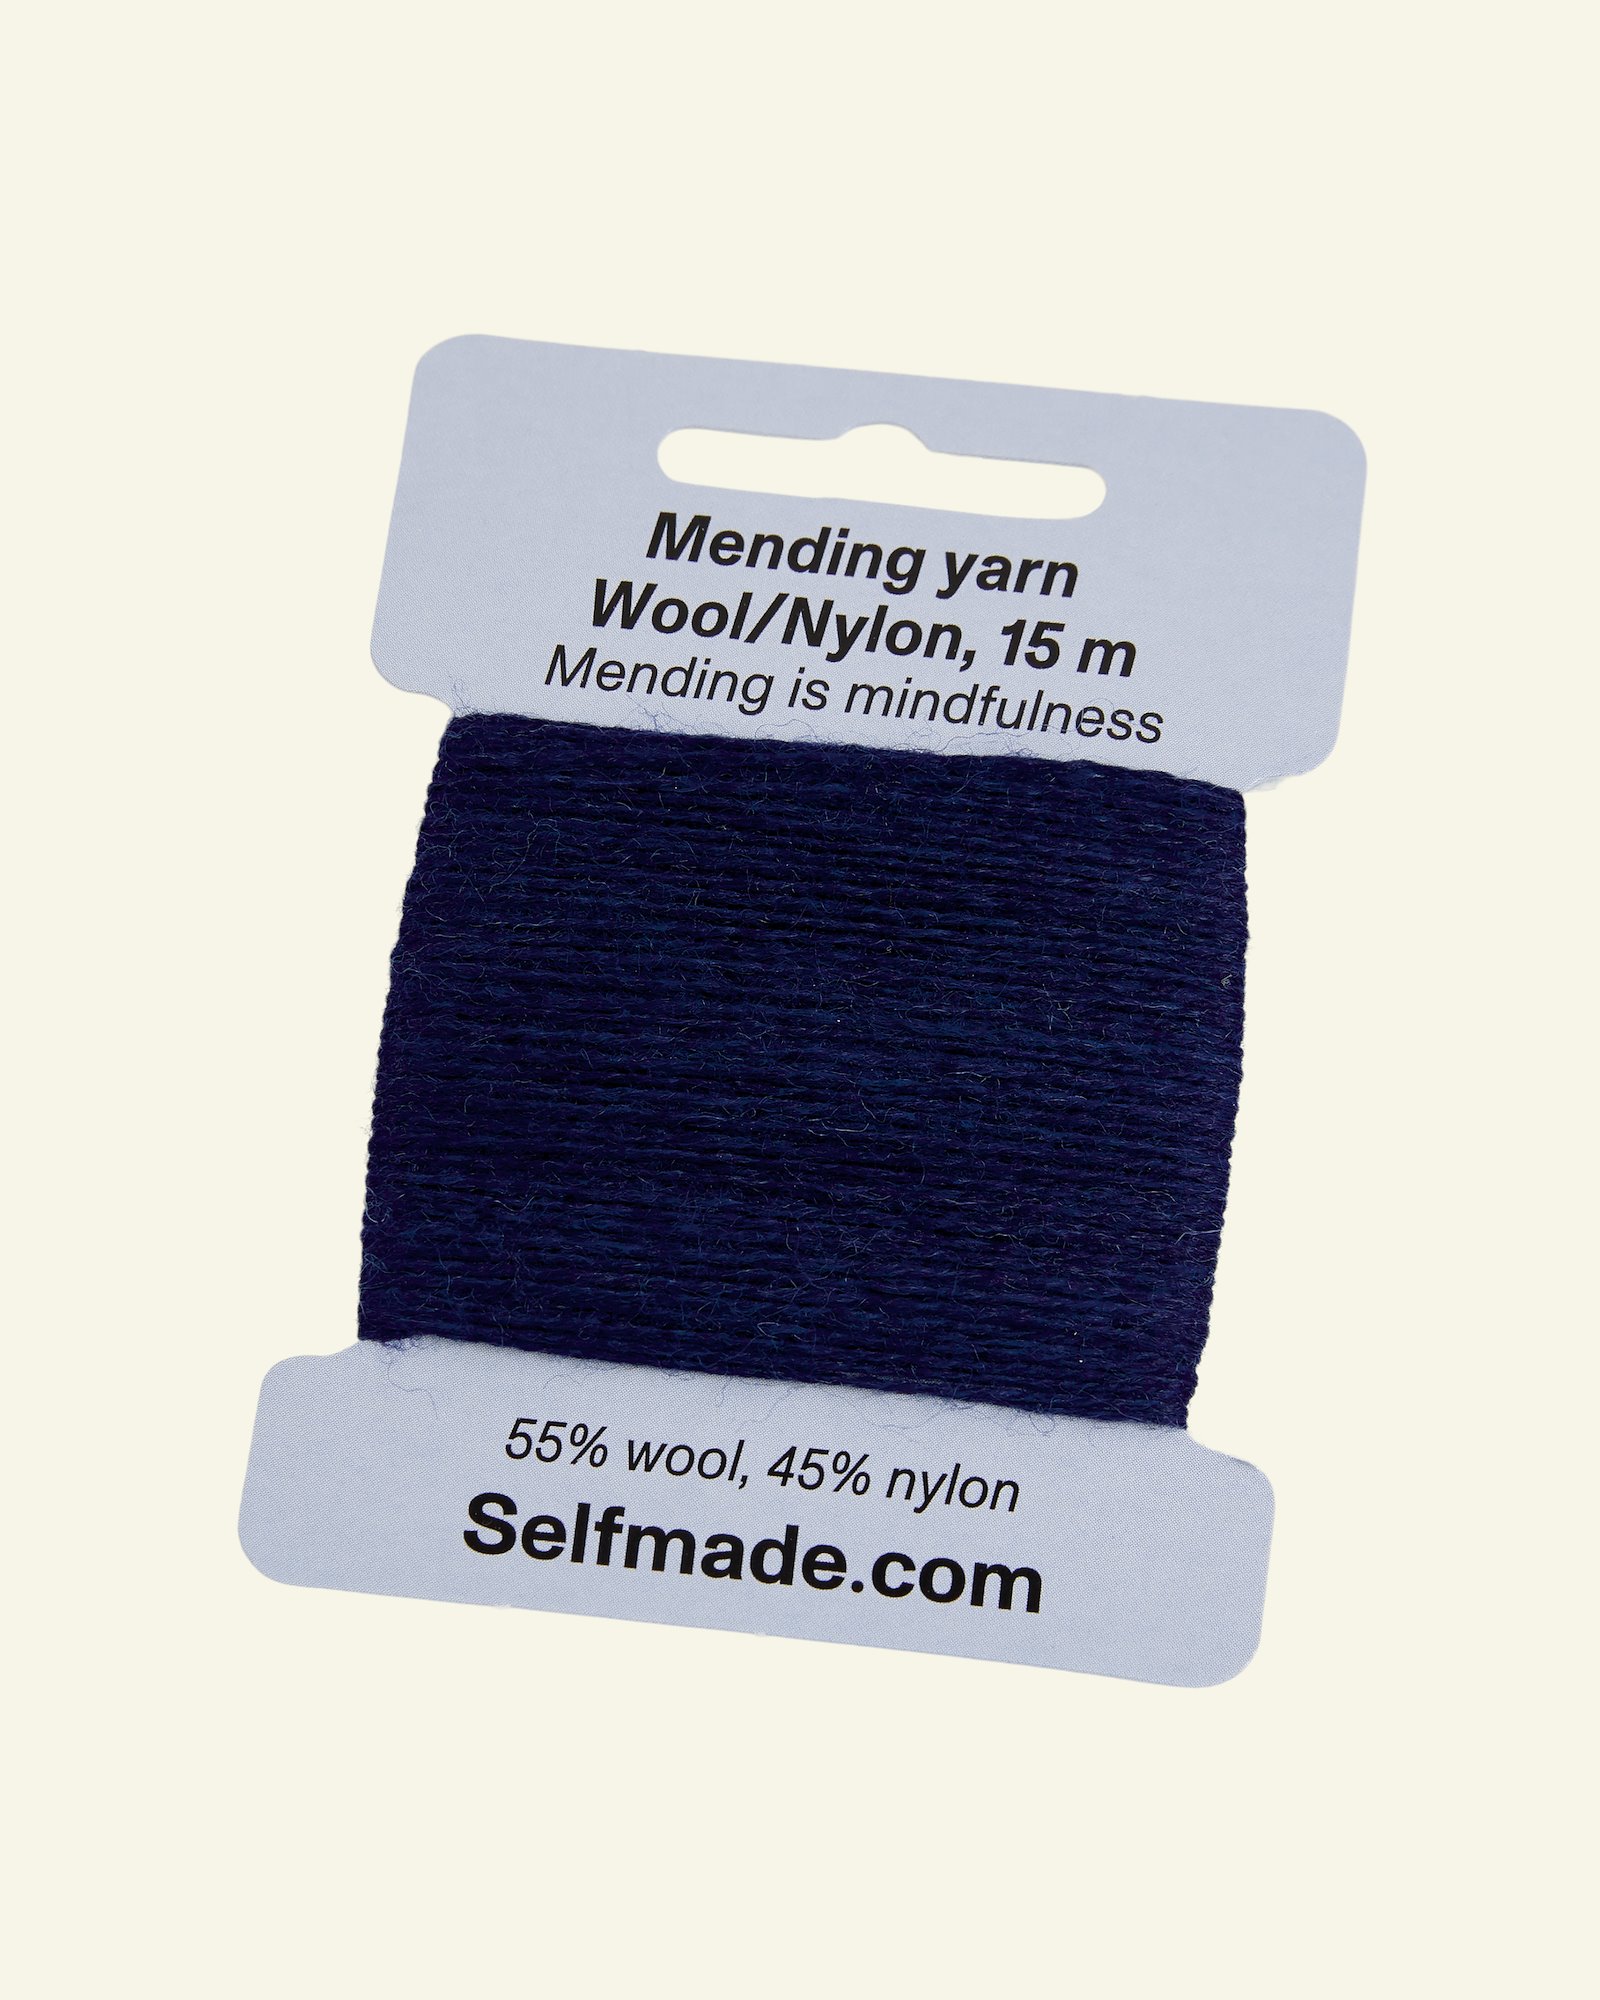 Mending yarn wool mix navy blue 15m 35512_pack